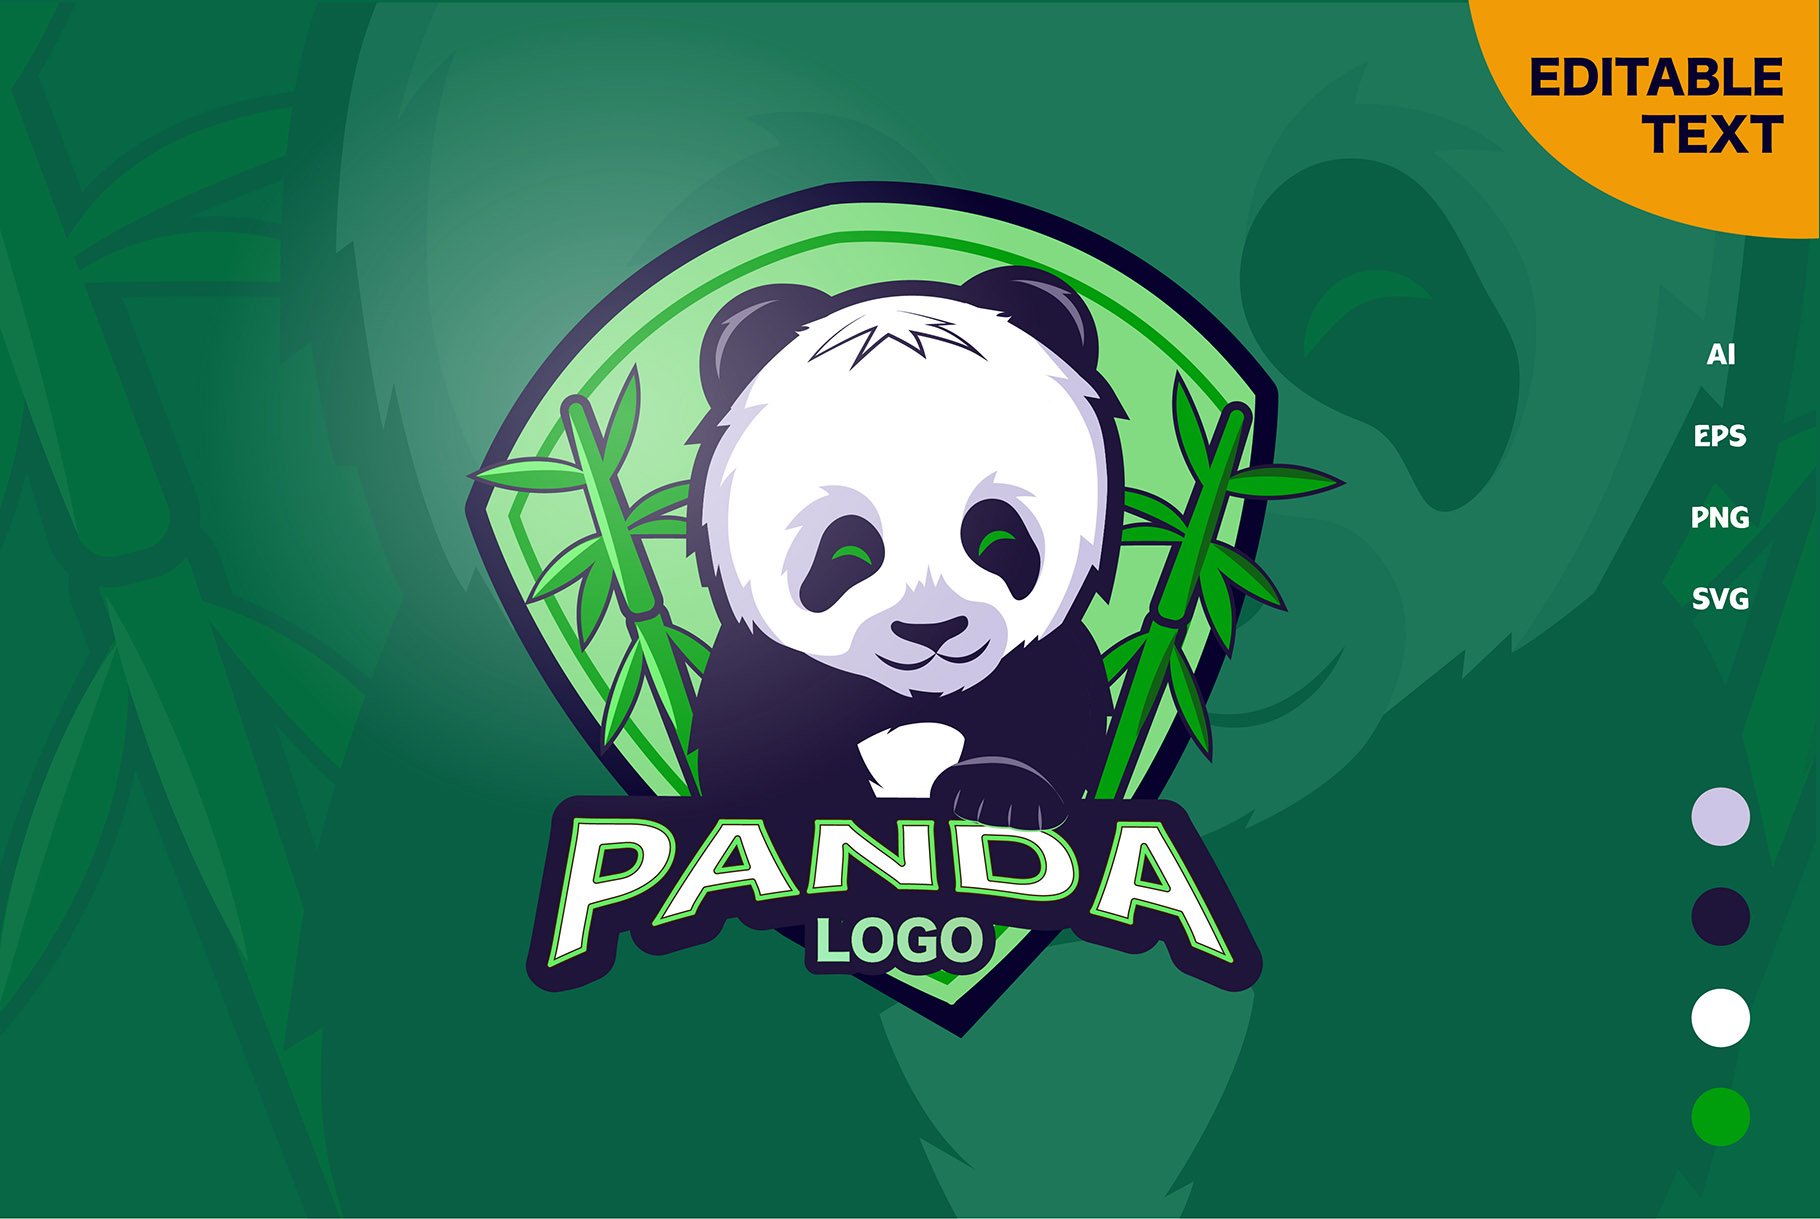 Little panda - mascot logo cover image.